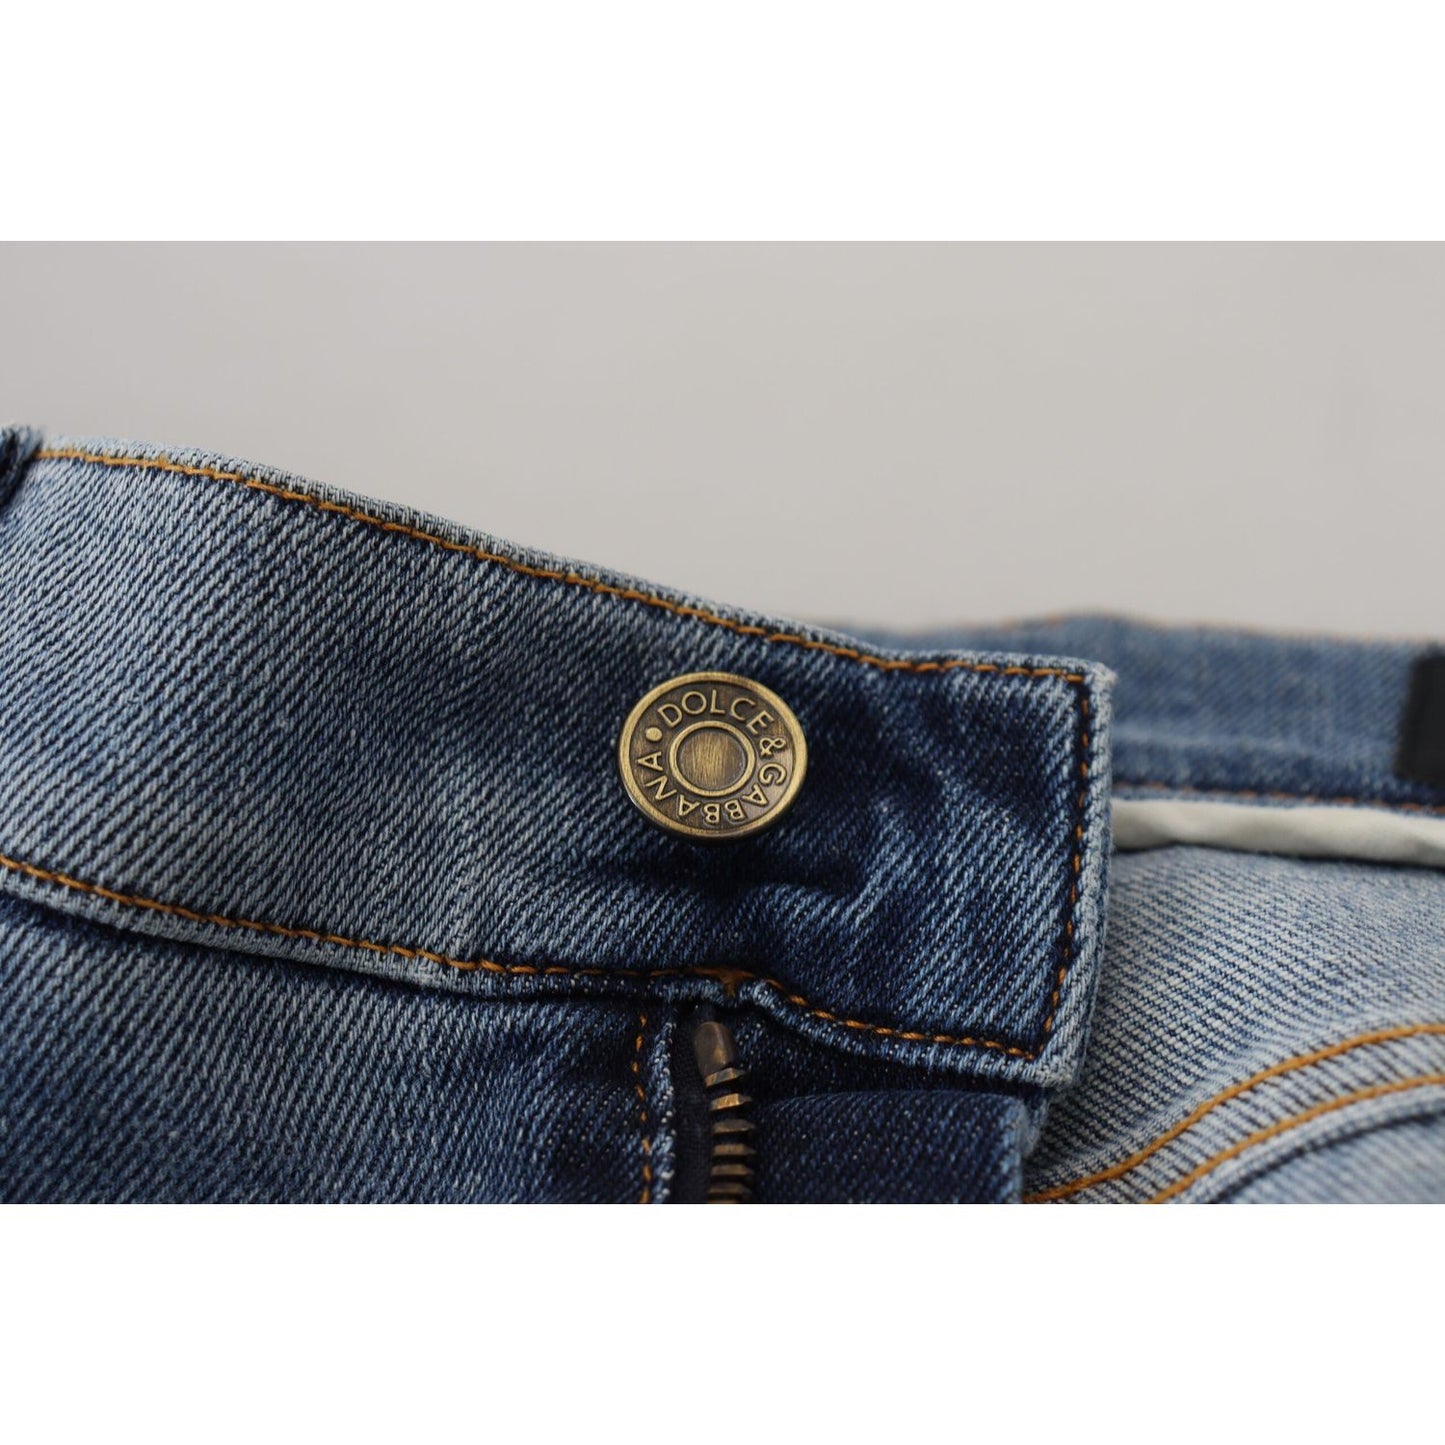 Dolce & Gabbana Chic Slim Fit Italian Denim Jeans blue-slim-fit-tattered-cotton-denim-jeans IMG_6145-scaled-bc8f3f2a-97b.jpg